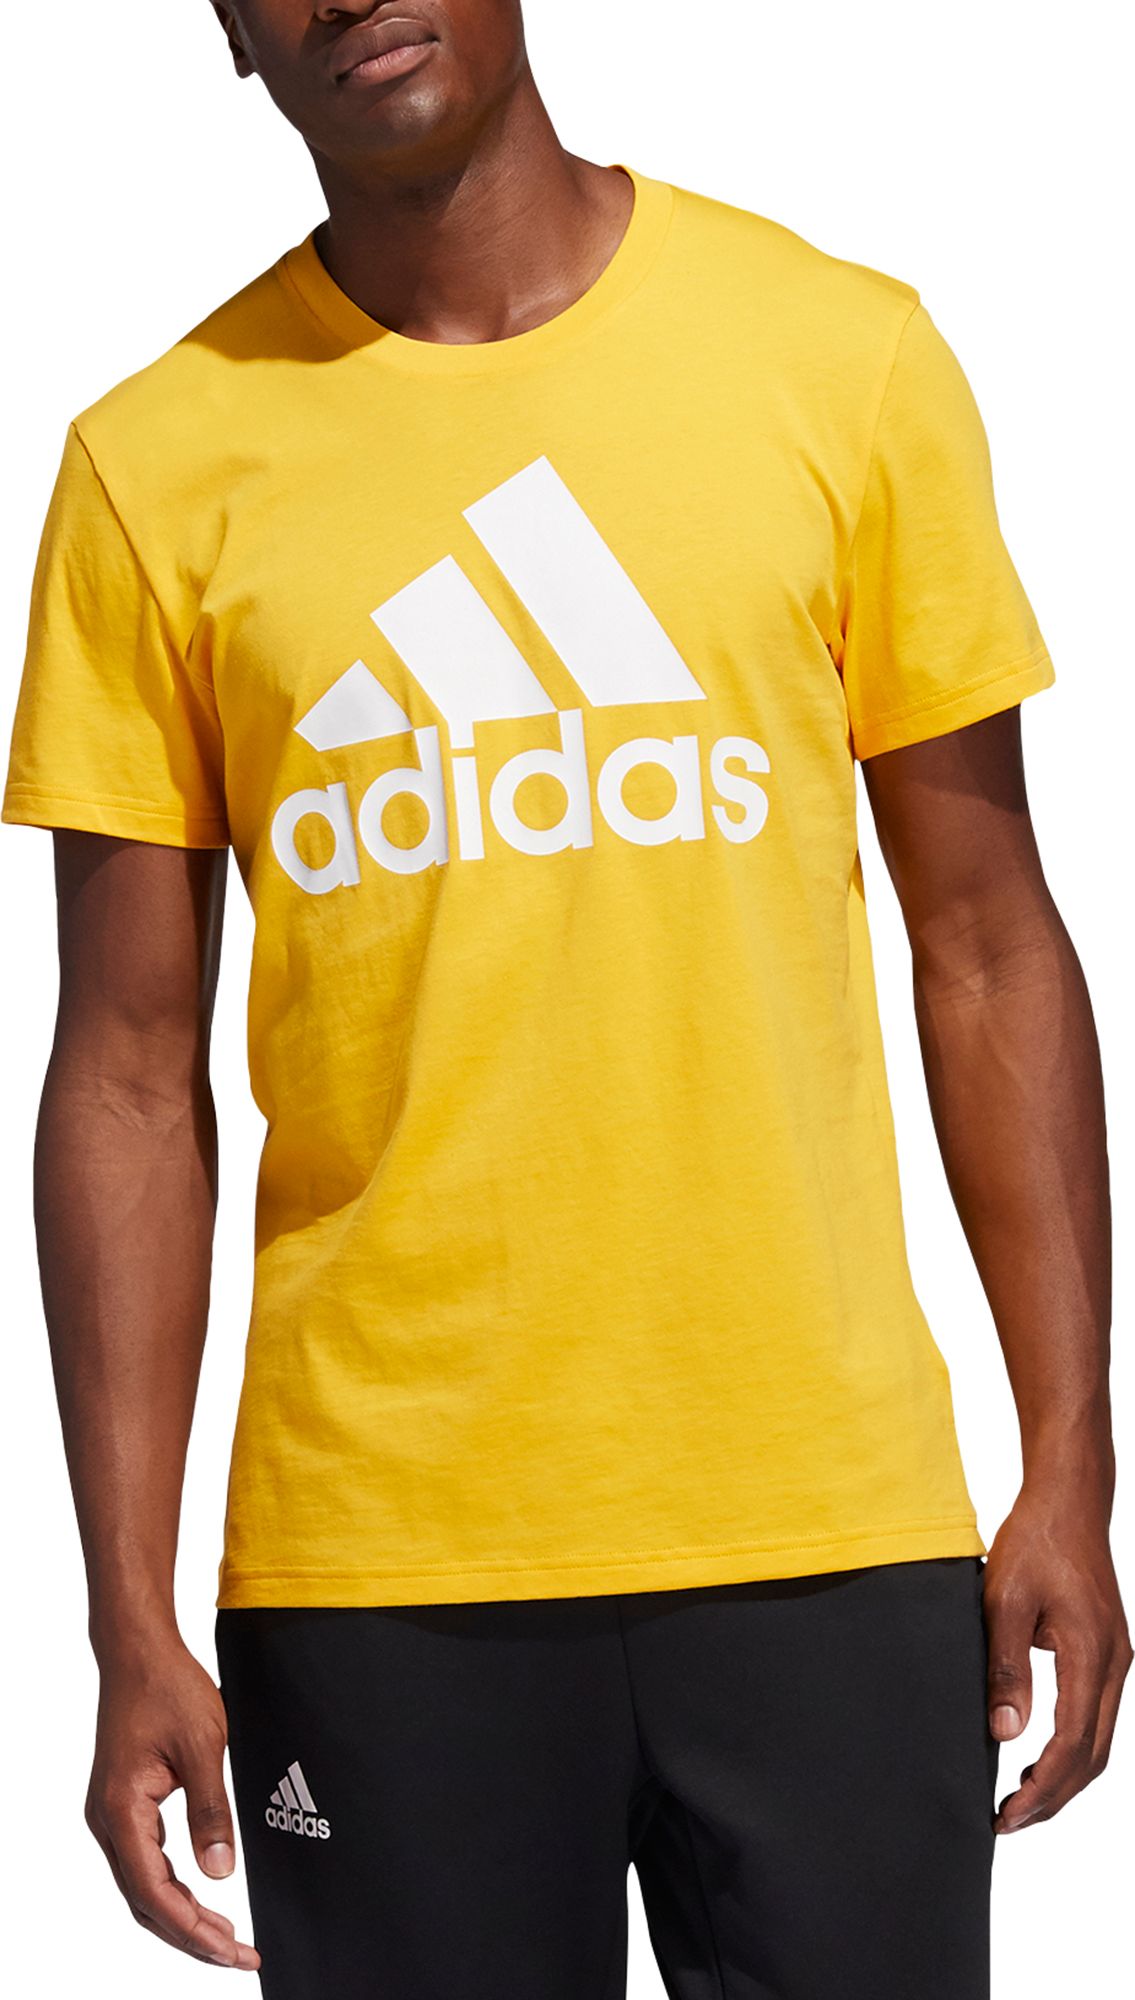 gold adidas shirt